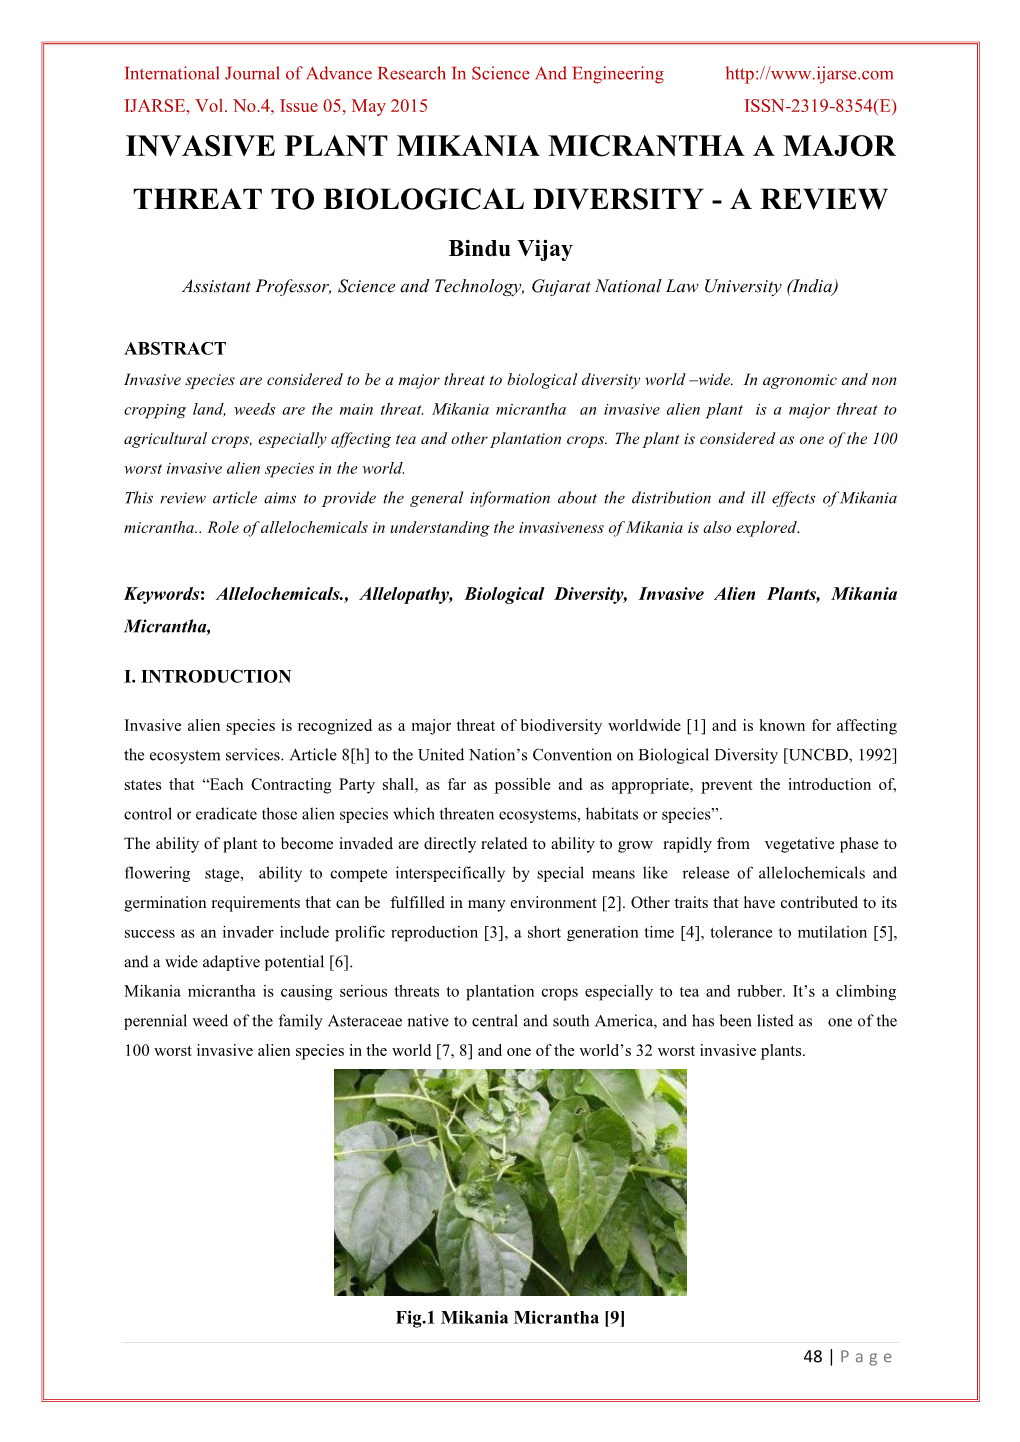 Invasive Plant Mikania Micrantha a Major